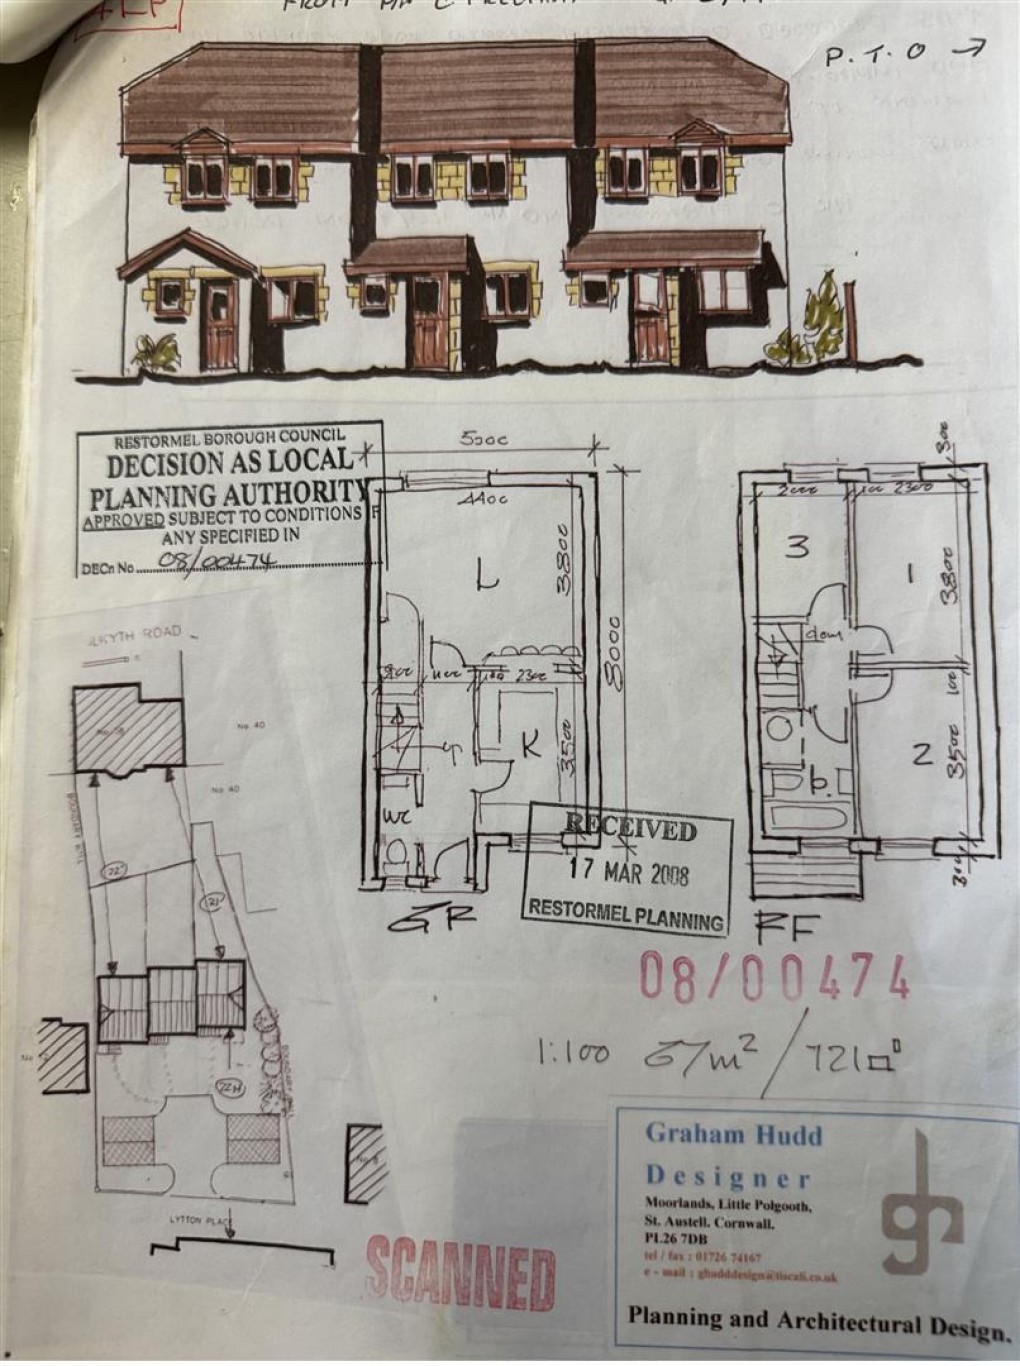 Floorplan for Lytton Place, St. Austell